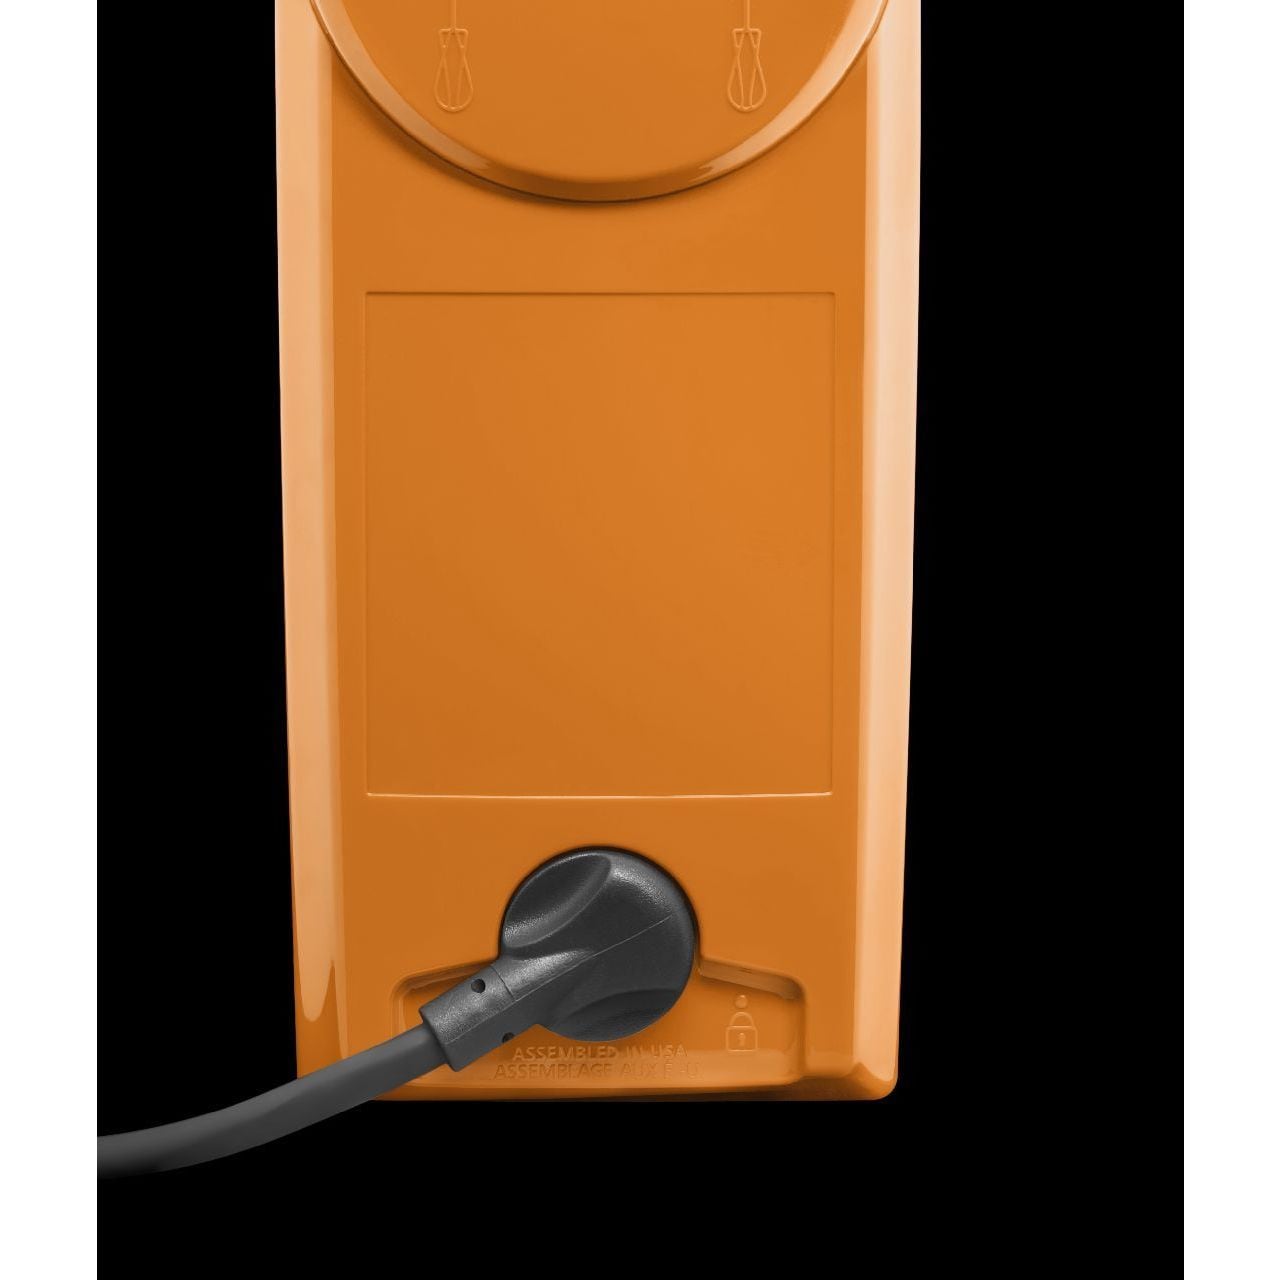 Tangerine KitchenAid KHM512TG 5-Speed Ultra Power Hand Mixer Renewed 